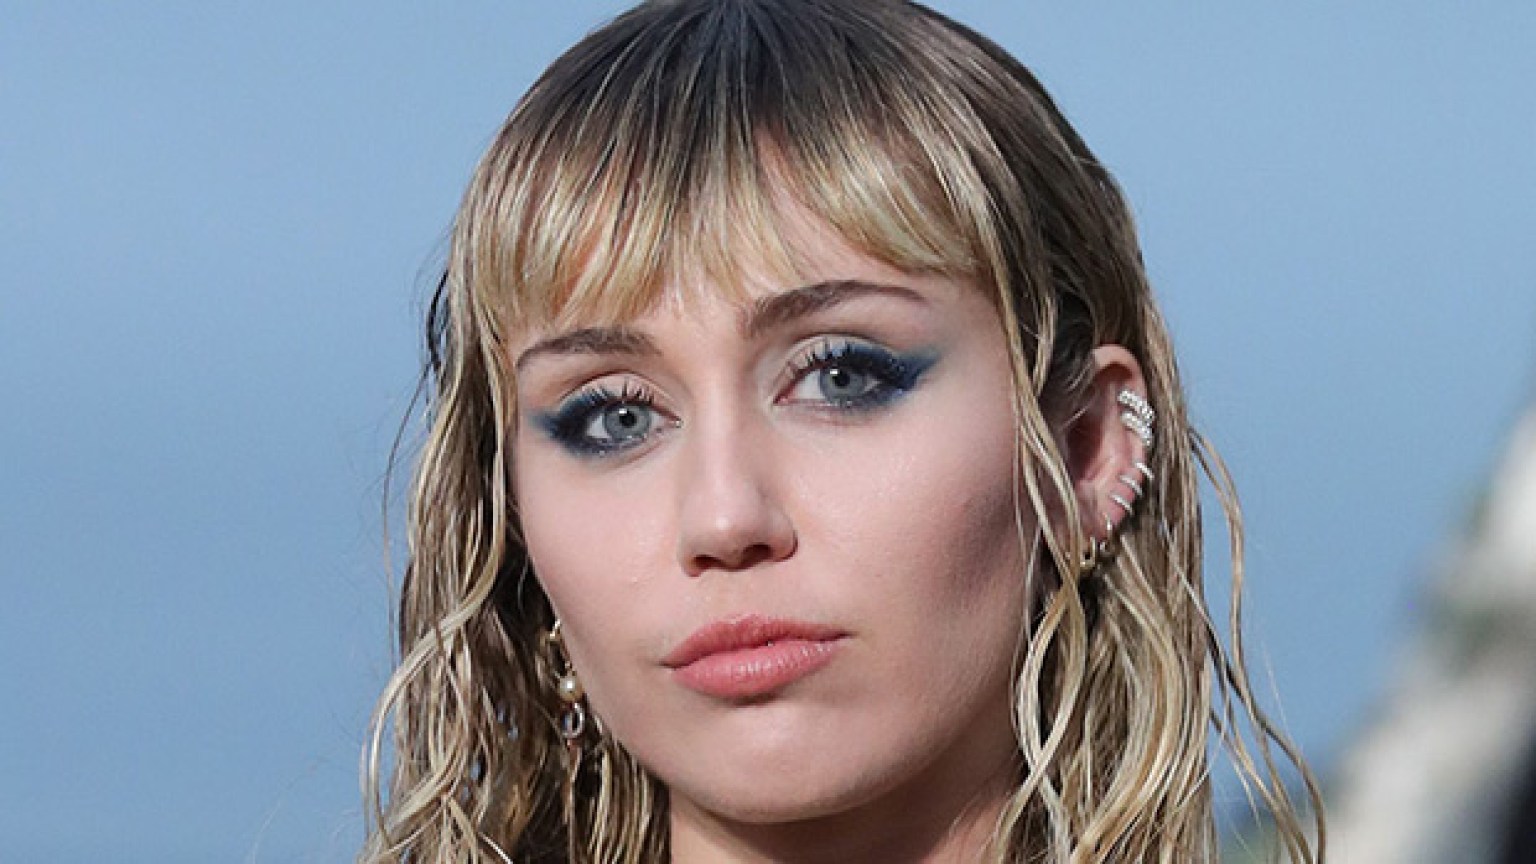 2. Miley Cyrus Rocks New Platinum Blue Hair at the 2019 Met Gala - wide 7